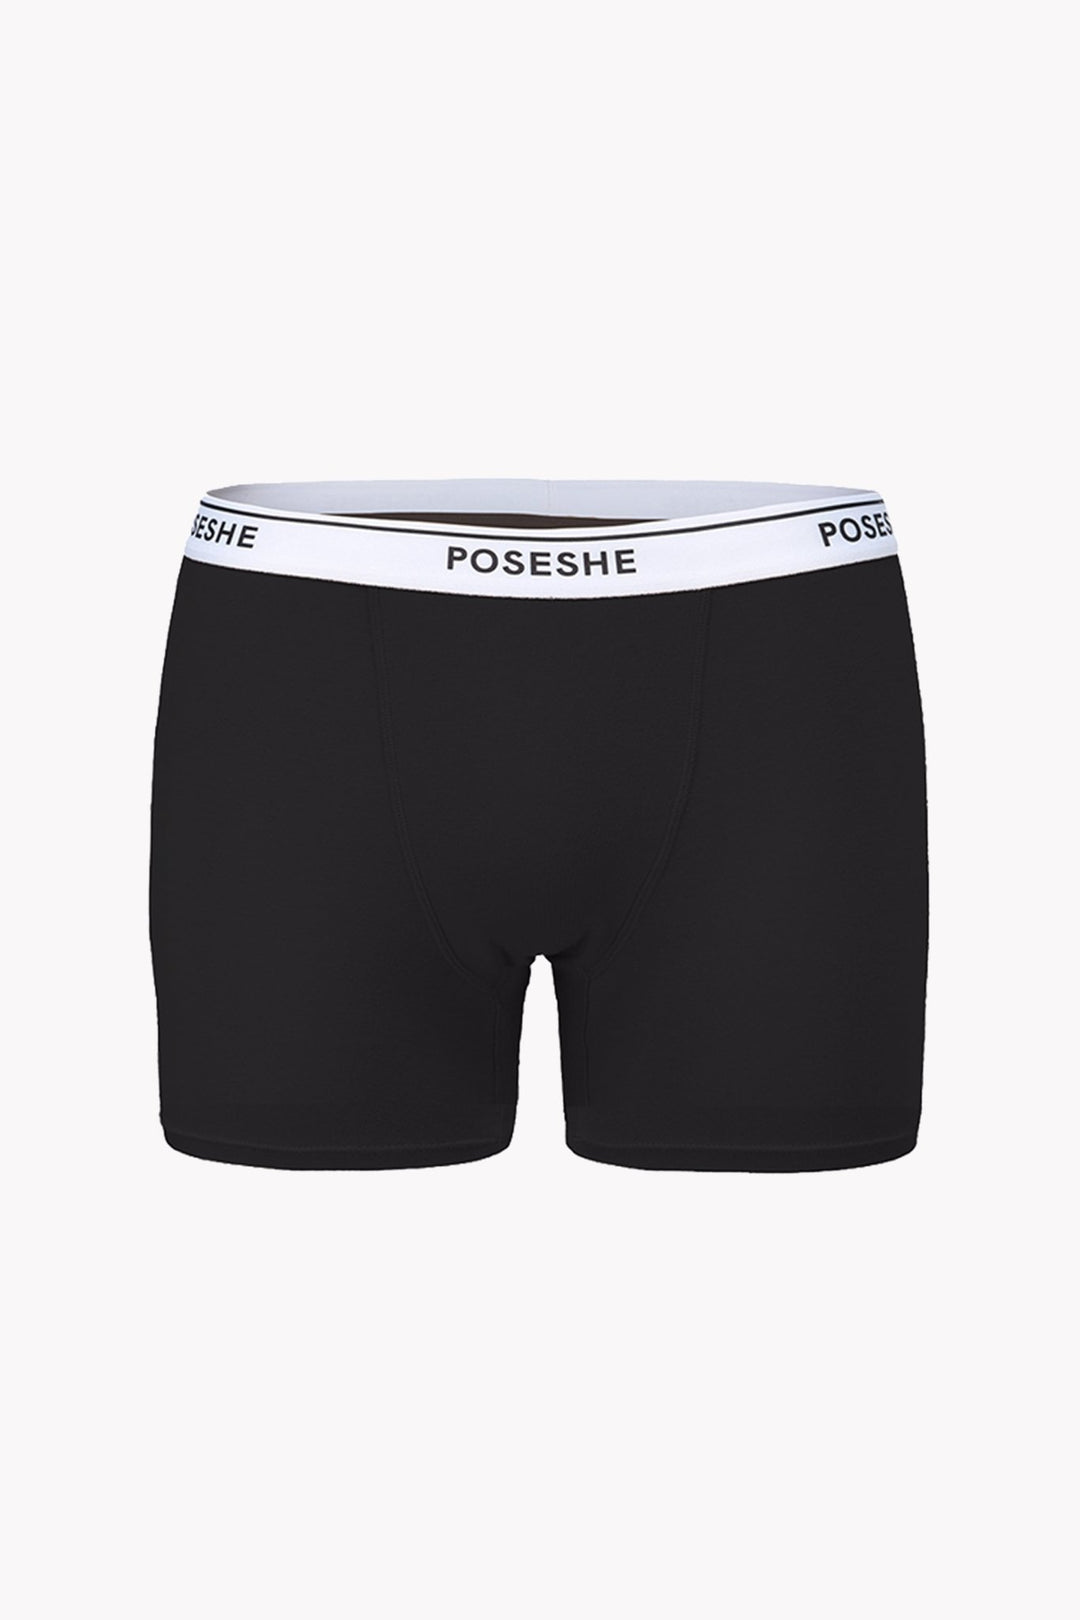 POSESHE Women's Micro-Modal Boyshorts Panties Underwear, Anti-chafing Plus  Women's Boxer Briefs, 3 Inseam, 3 Pack